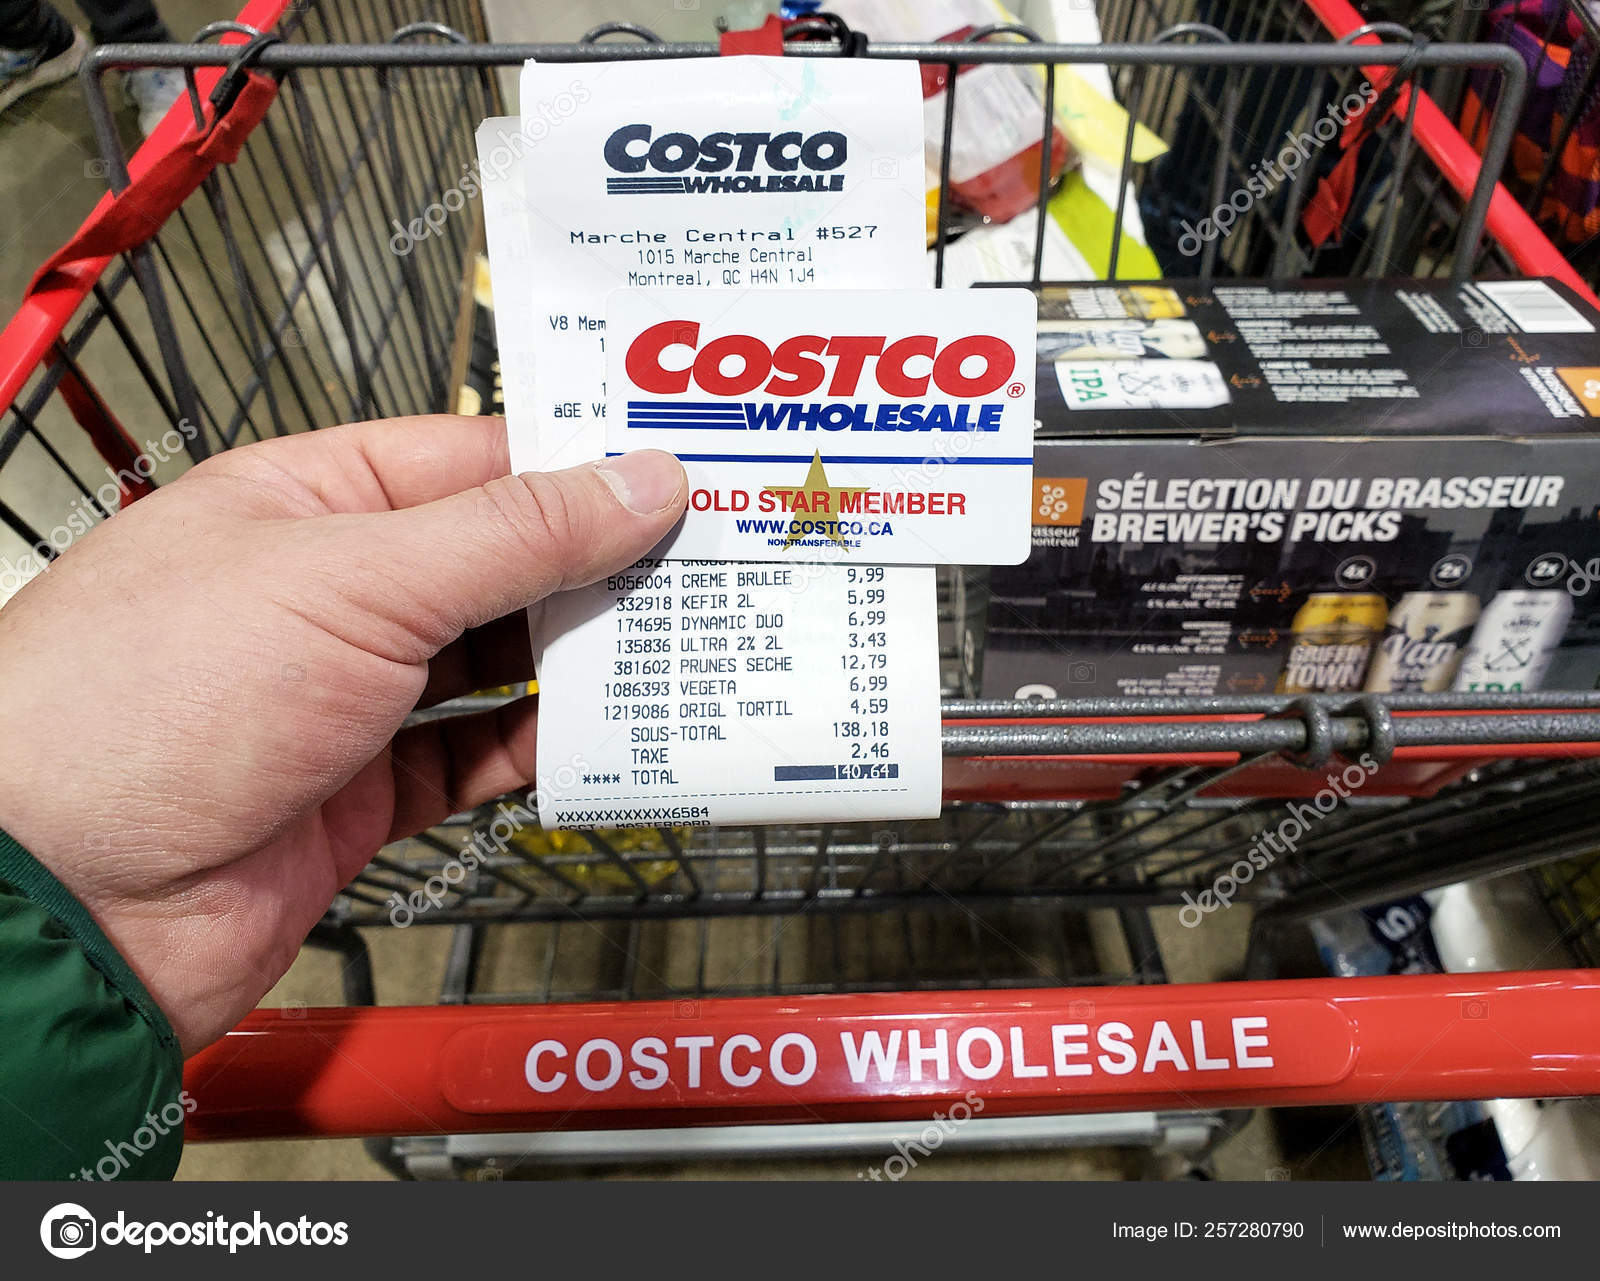 Costco Receipt And Membership Card Stock Editorial Photo C Dennizn 257280790 - roblox gift card costco canada